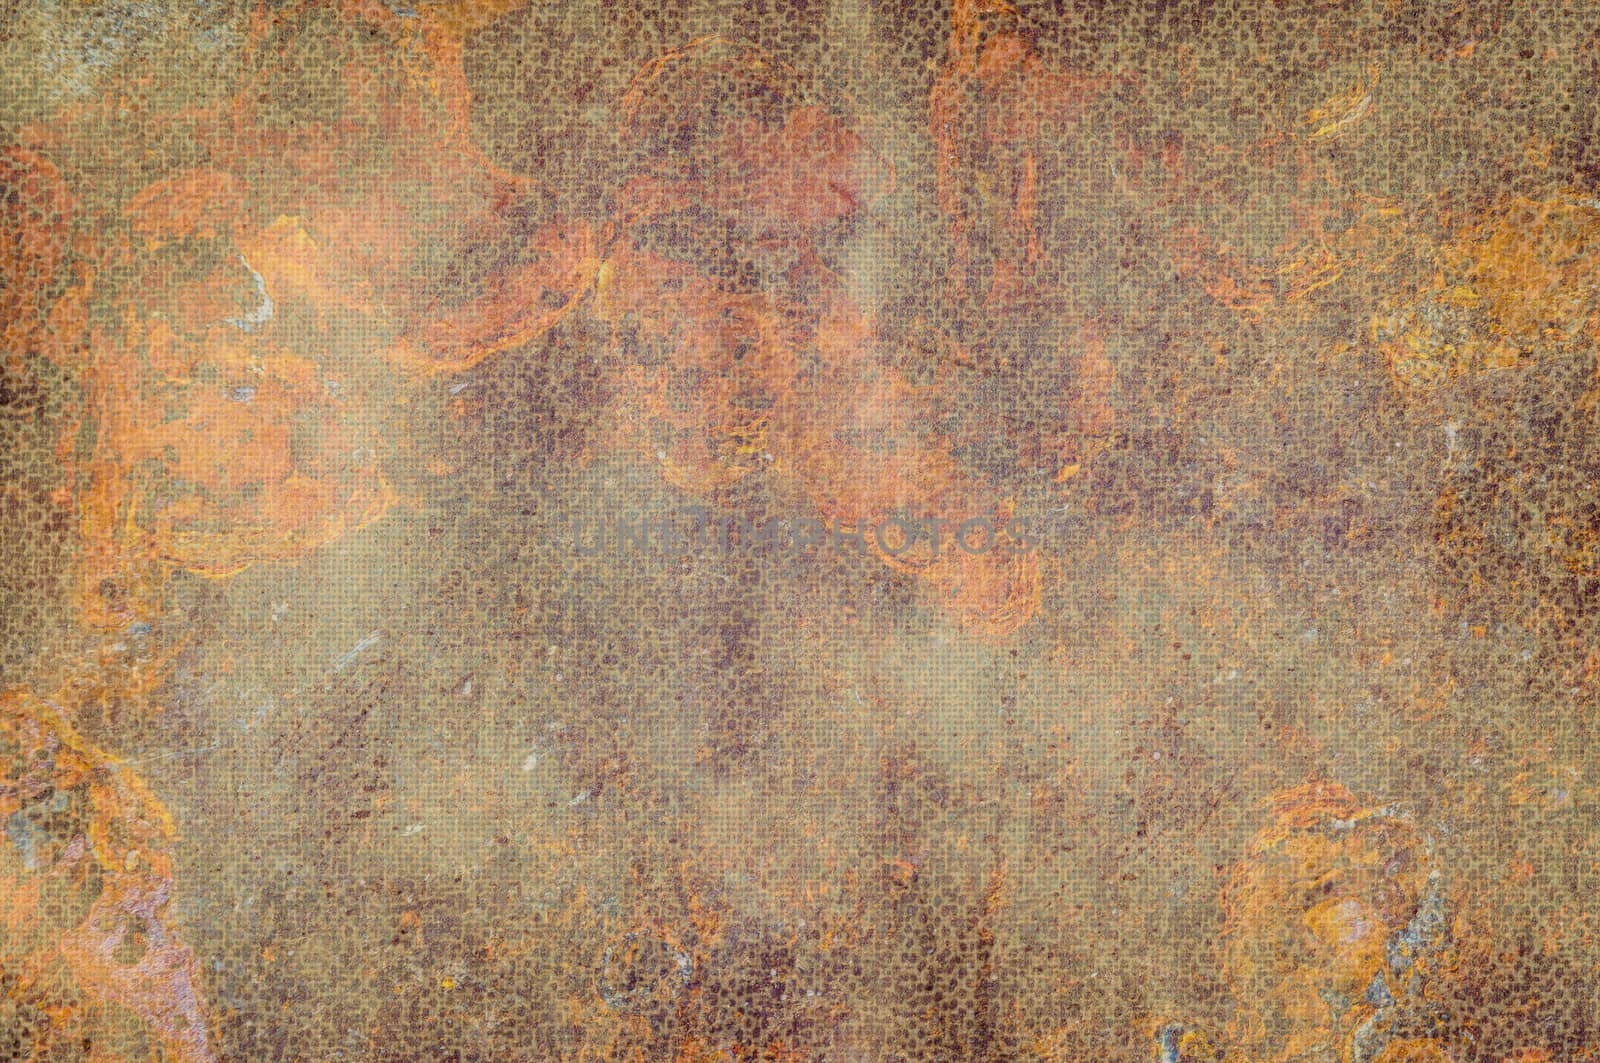 Colored Rust Metal Texture by MaxalTamor